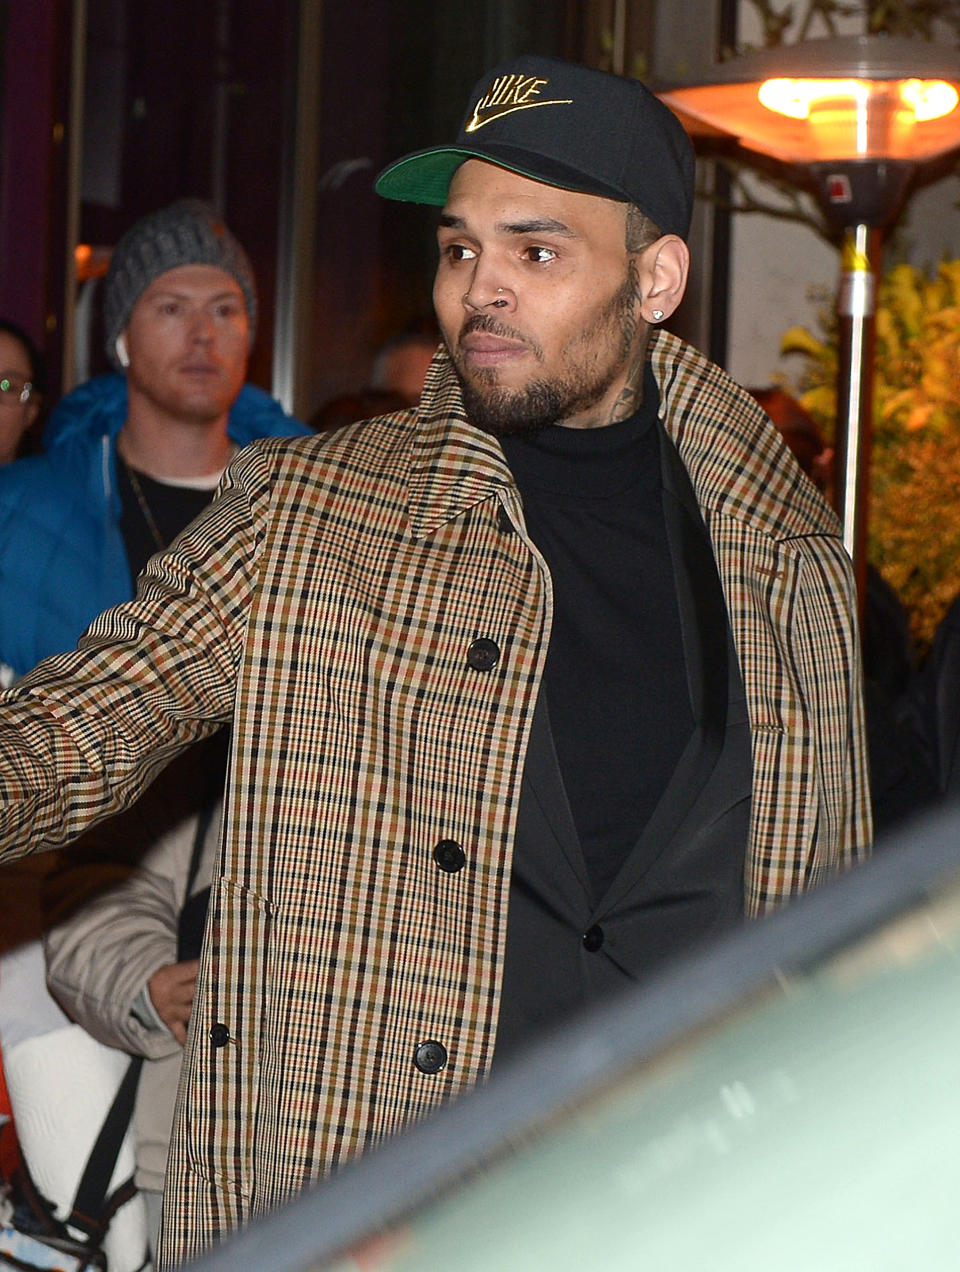 Chris Brown Posts on Instagram Amid Rape Allegation